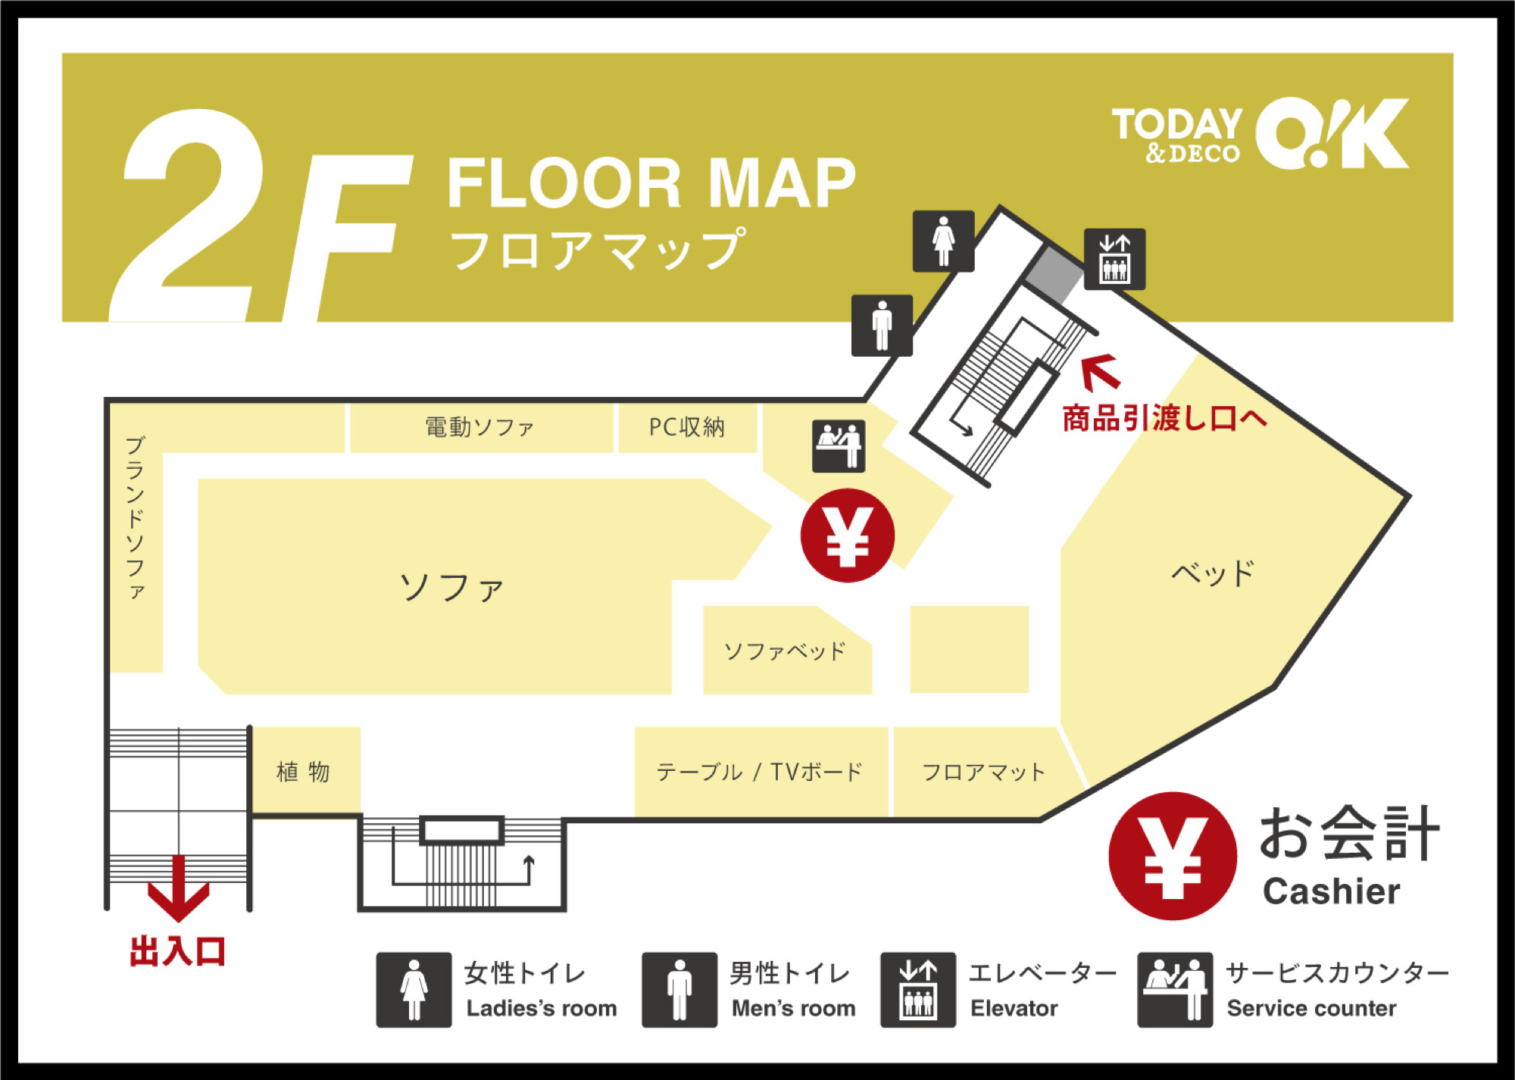 Floor Map Ja 2f Today O K Deco 那覇店